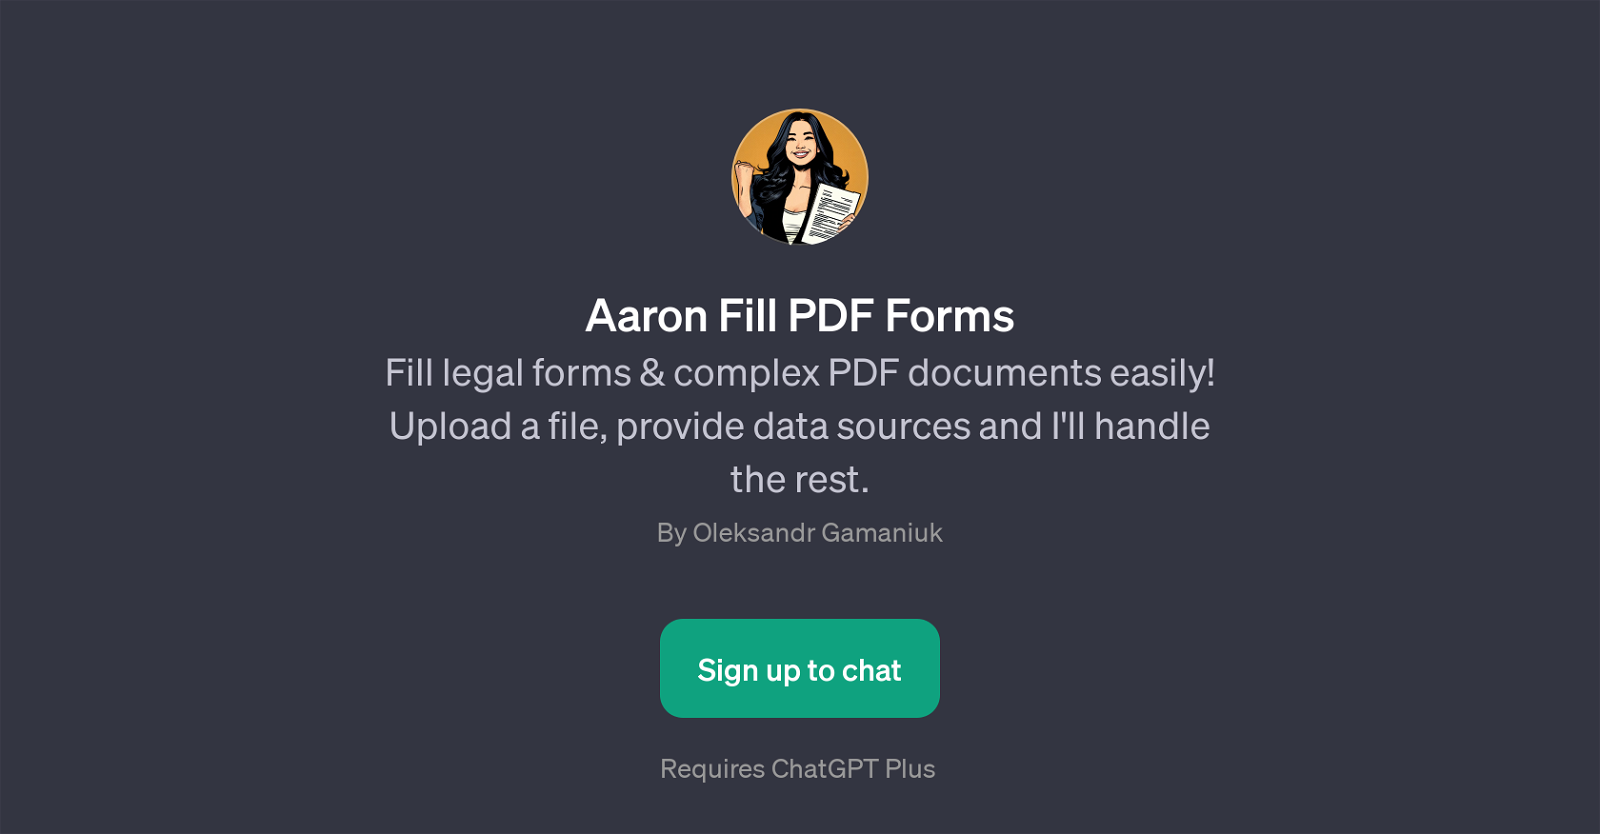 Aaron Fill PDF Forms website